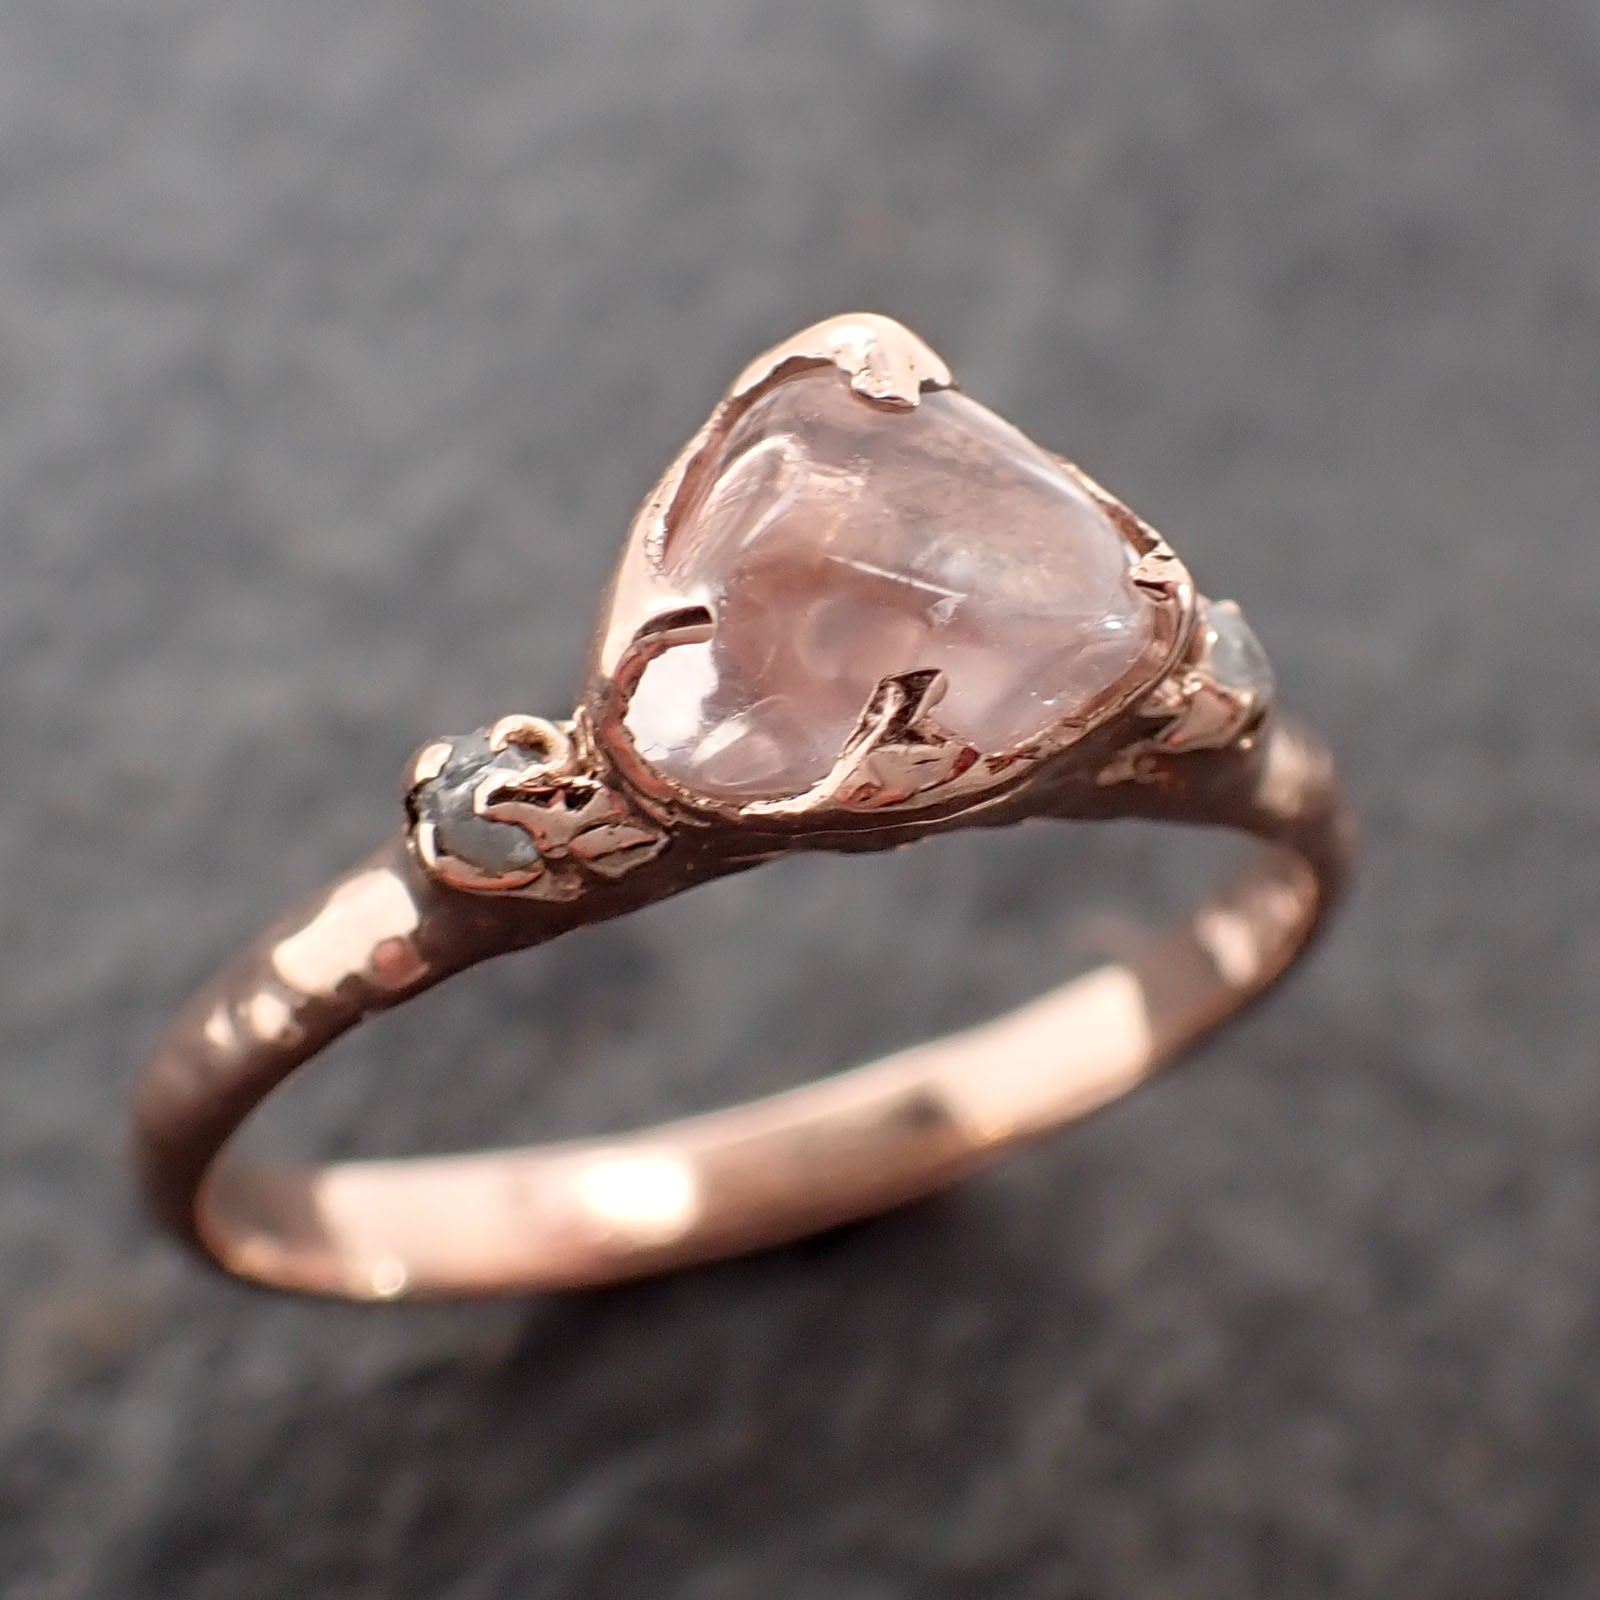 morganite pebble candy polished and rough diamond 14k rose gold gemstone multi stone ring 2737 Alternative Engagement